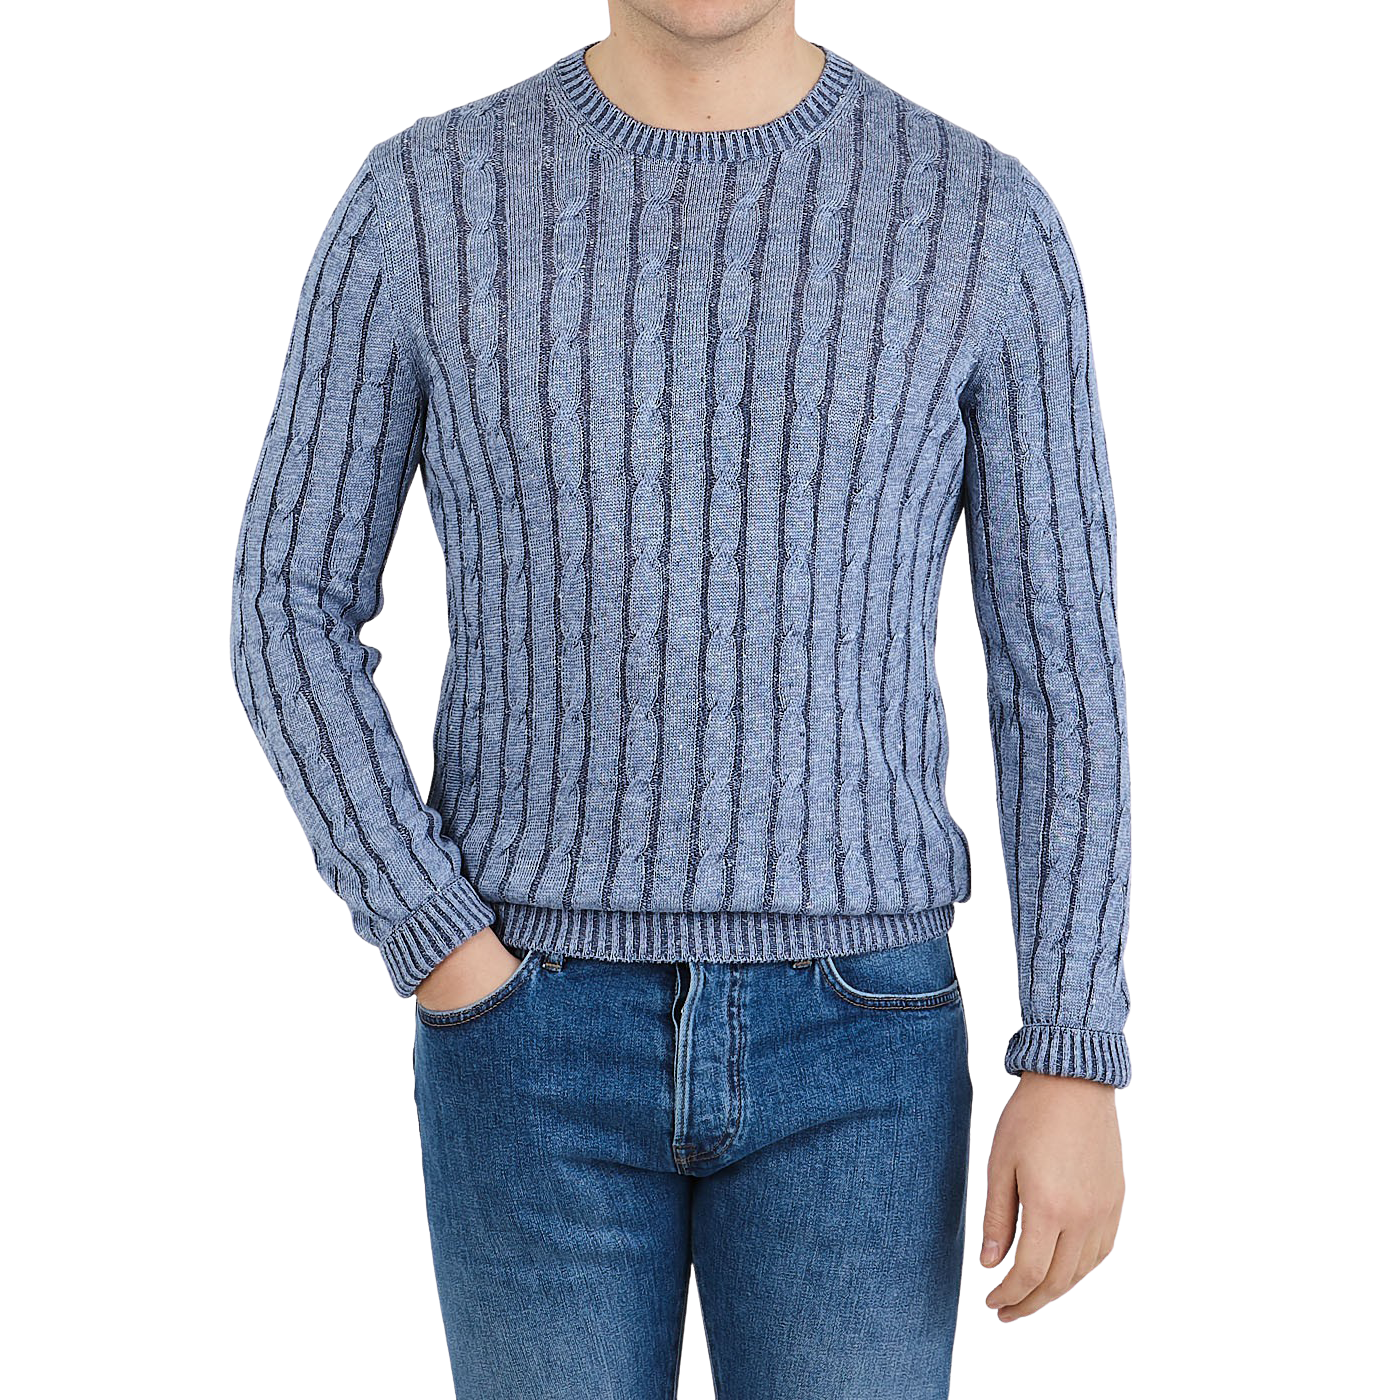 Gran Sasso Light Blue Knitted Linen Crewneck Sweater Front